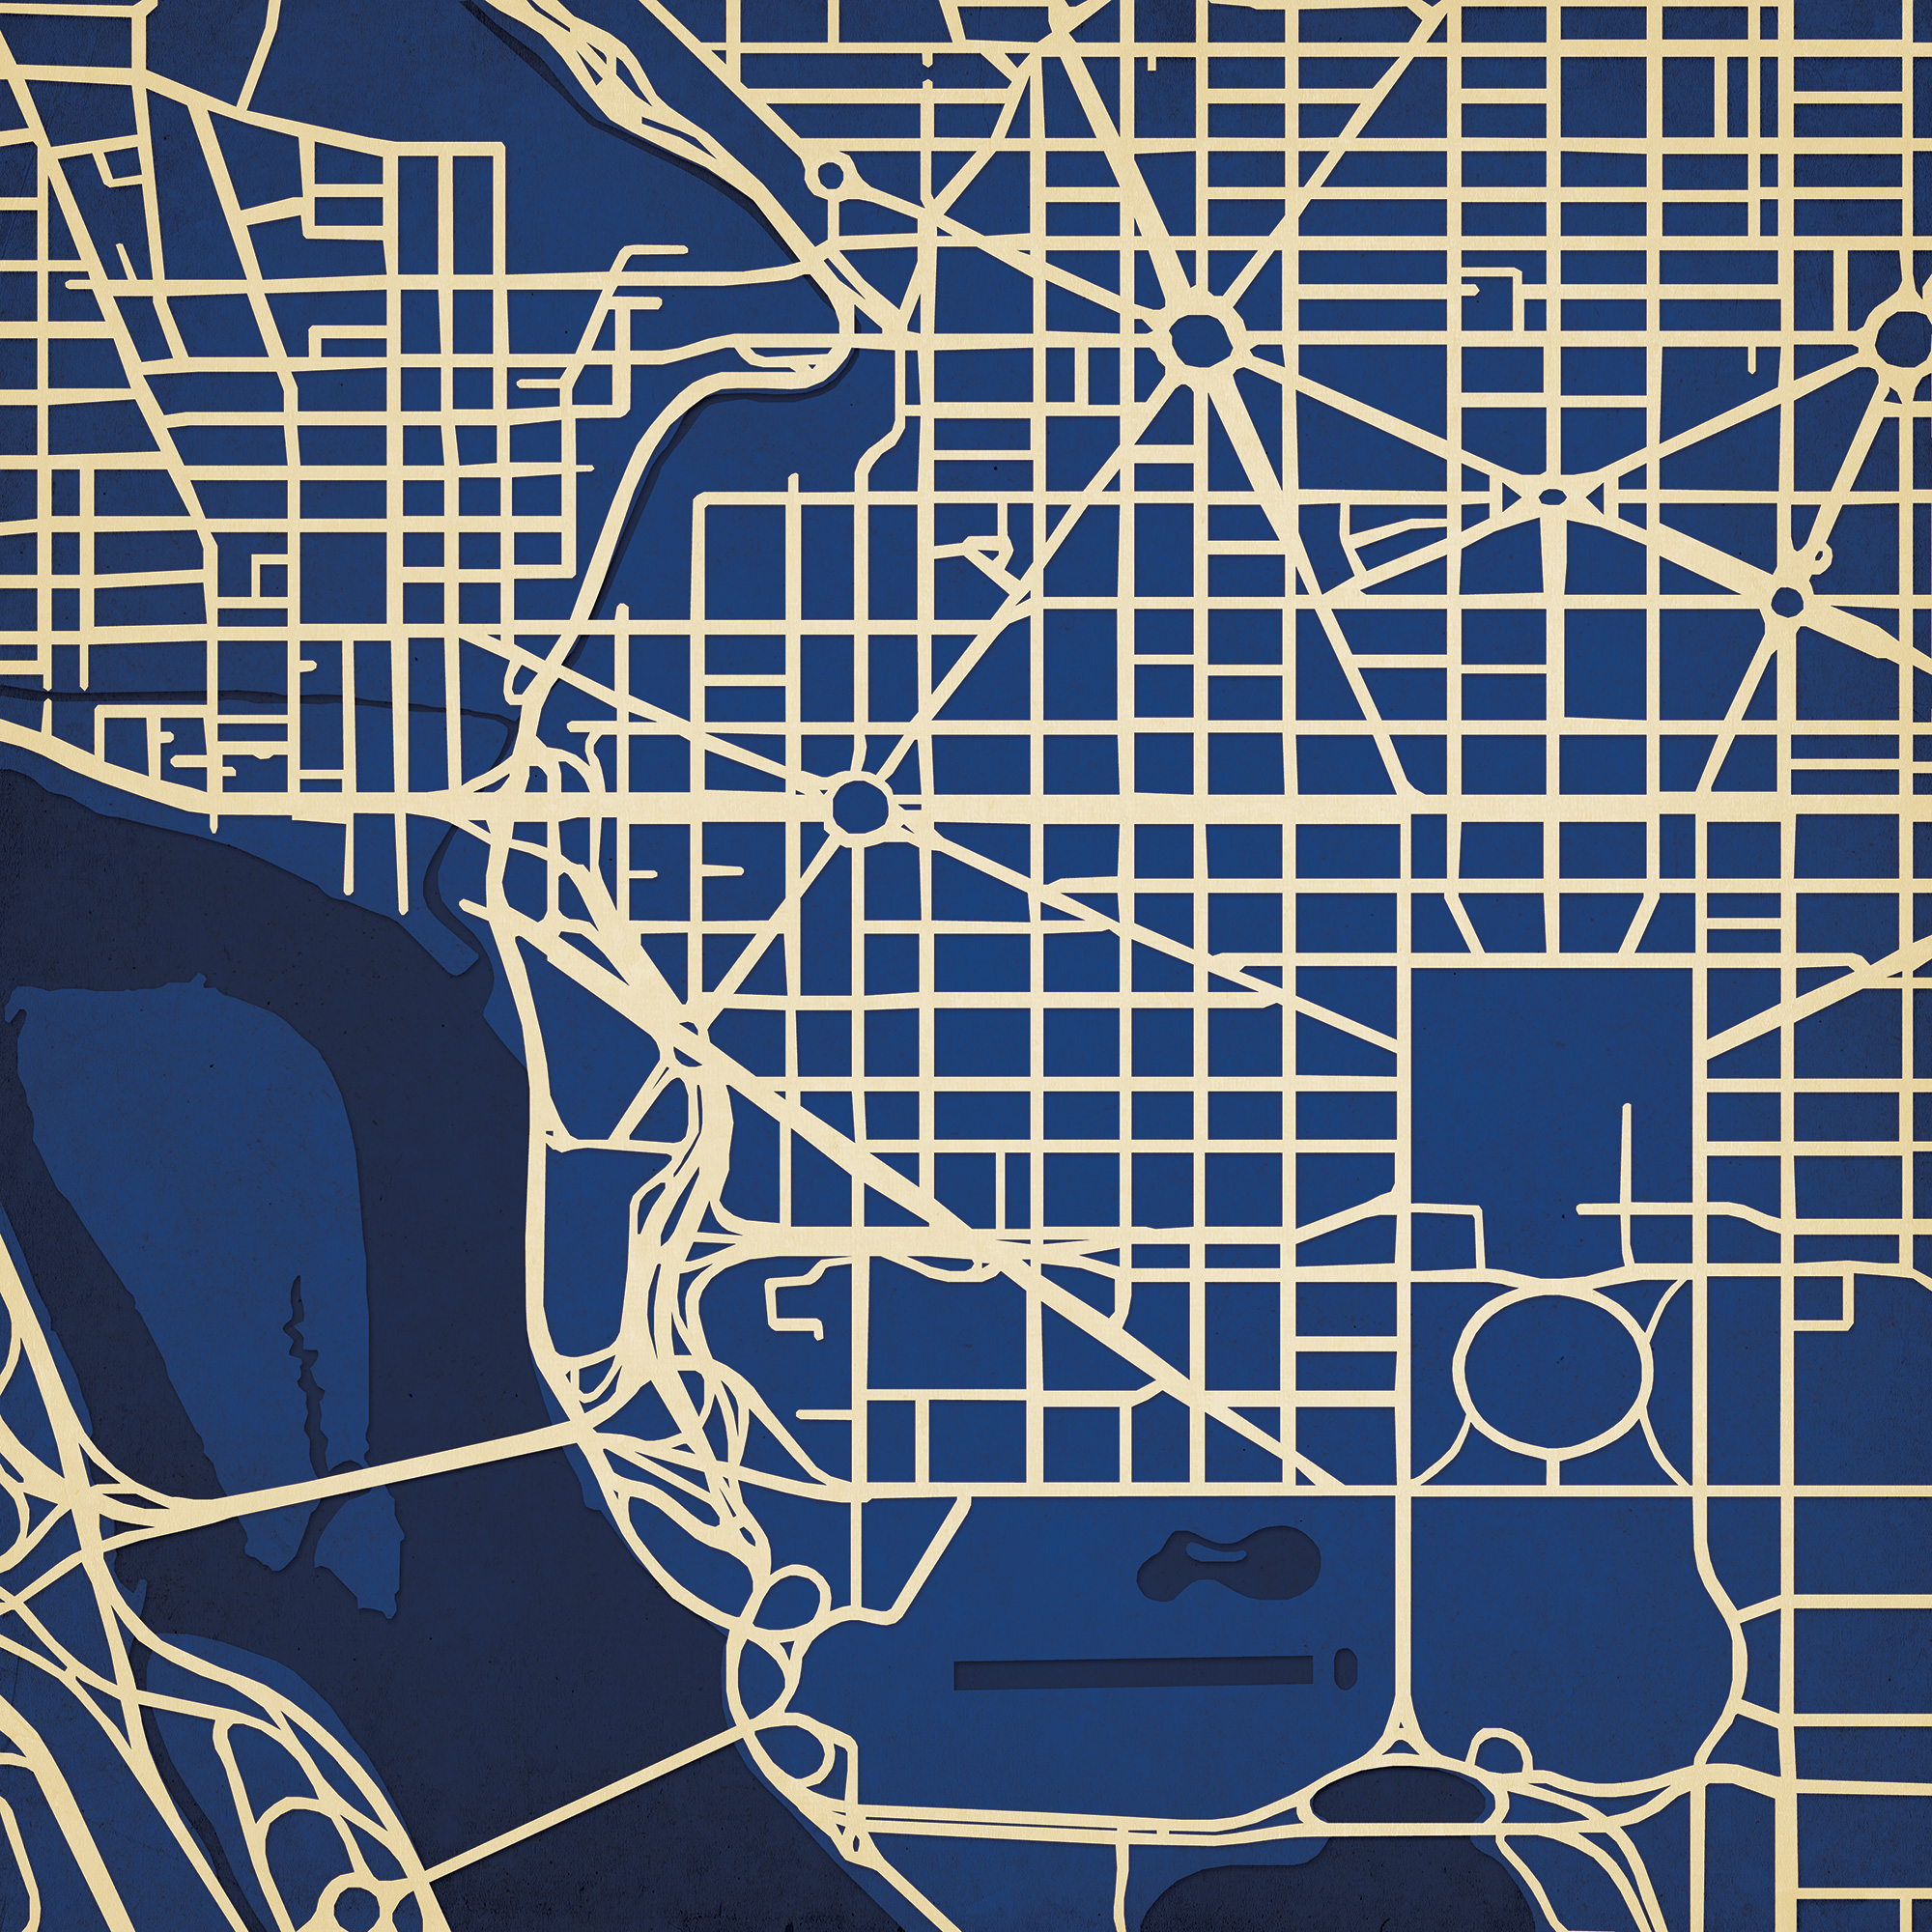 George Washington University Campus Map Art City Prints